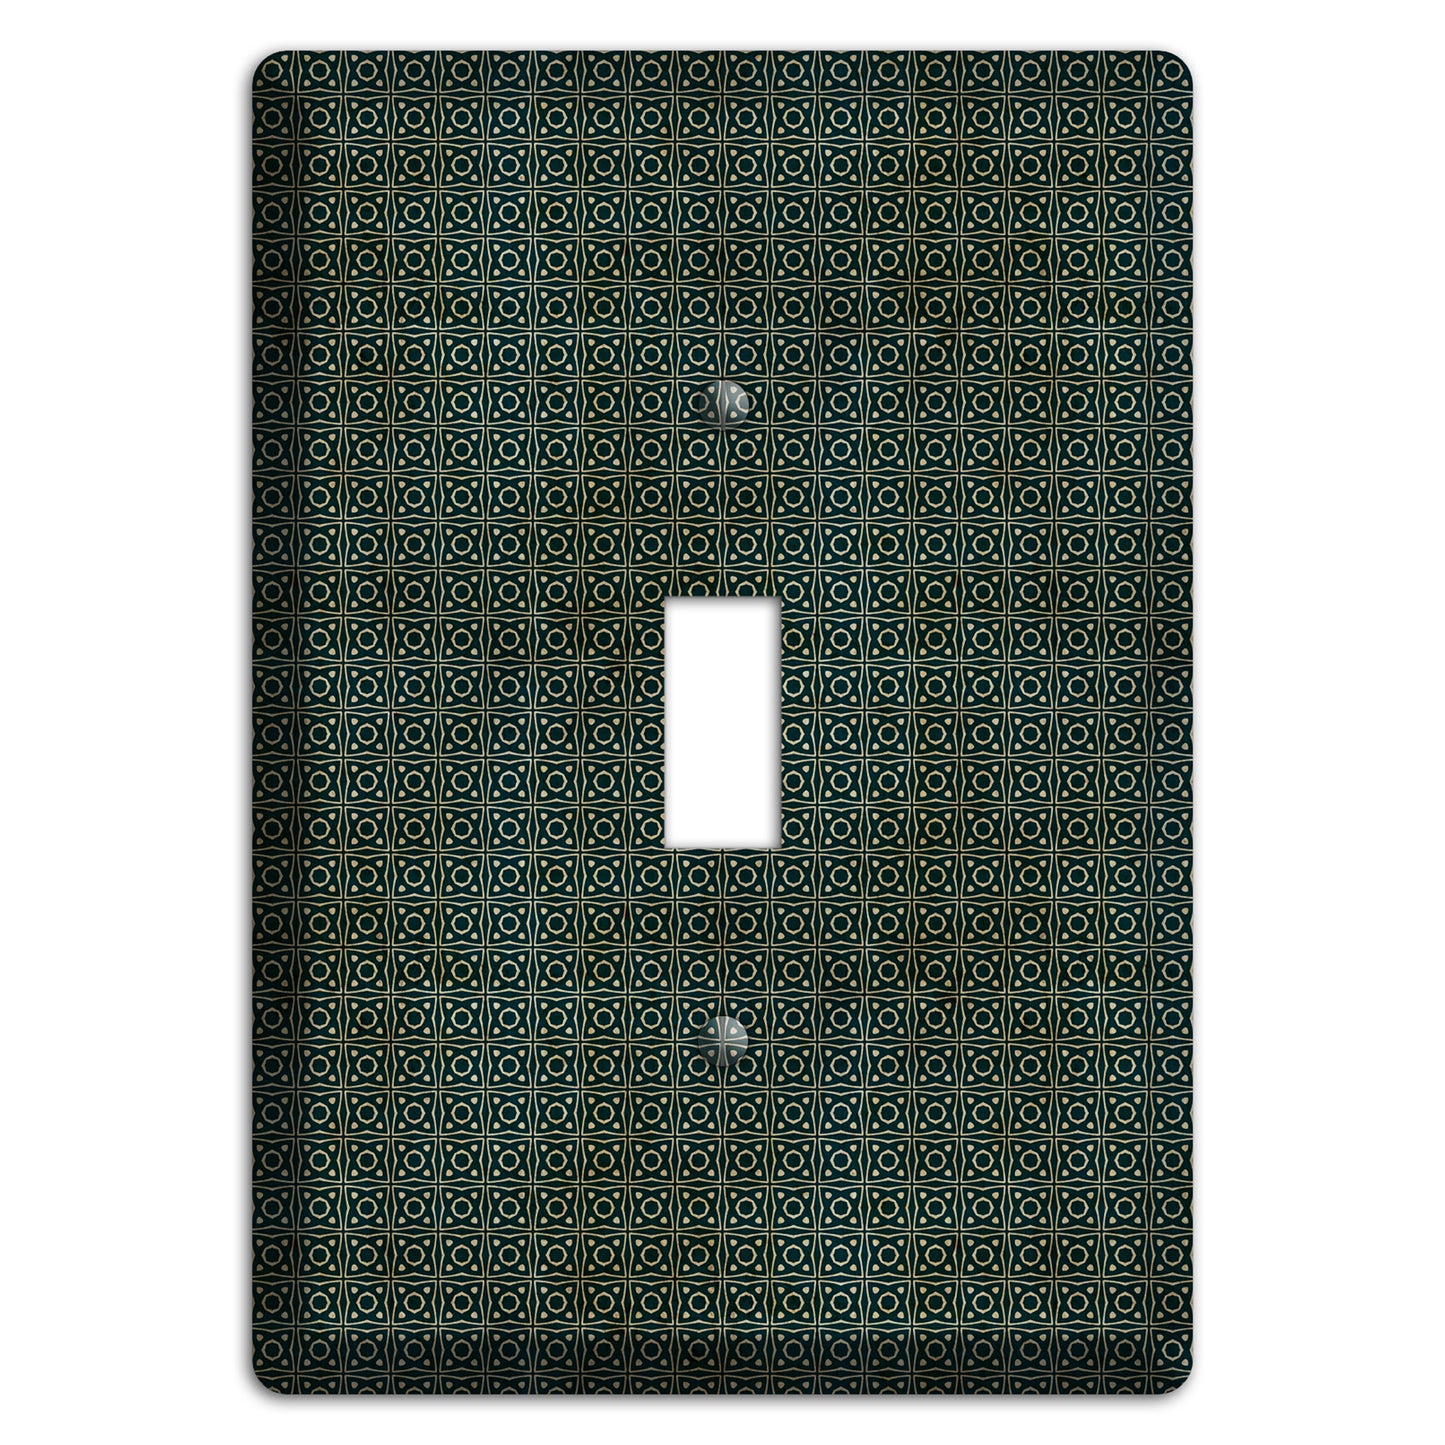 Dark Green Grunge Tiny Tiled Tapestry 4 Cover Plates